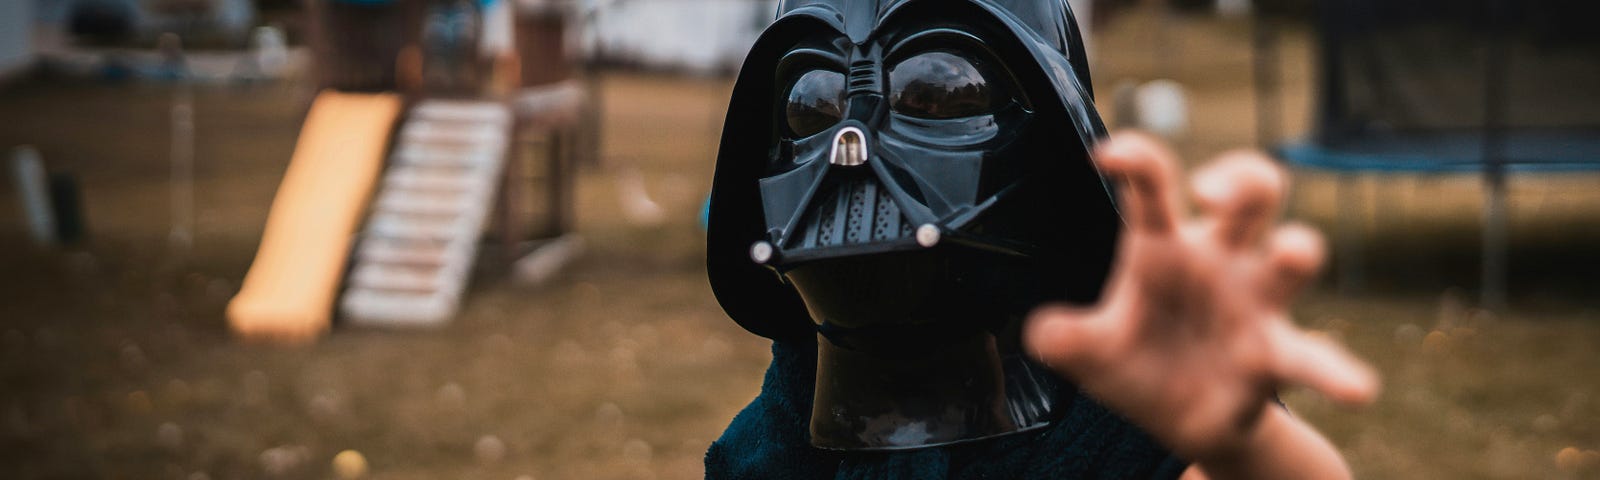 Boy in Darth Vader mask